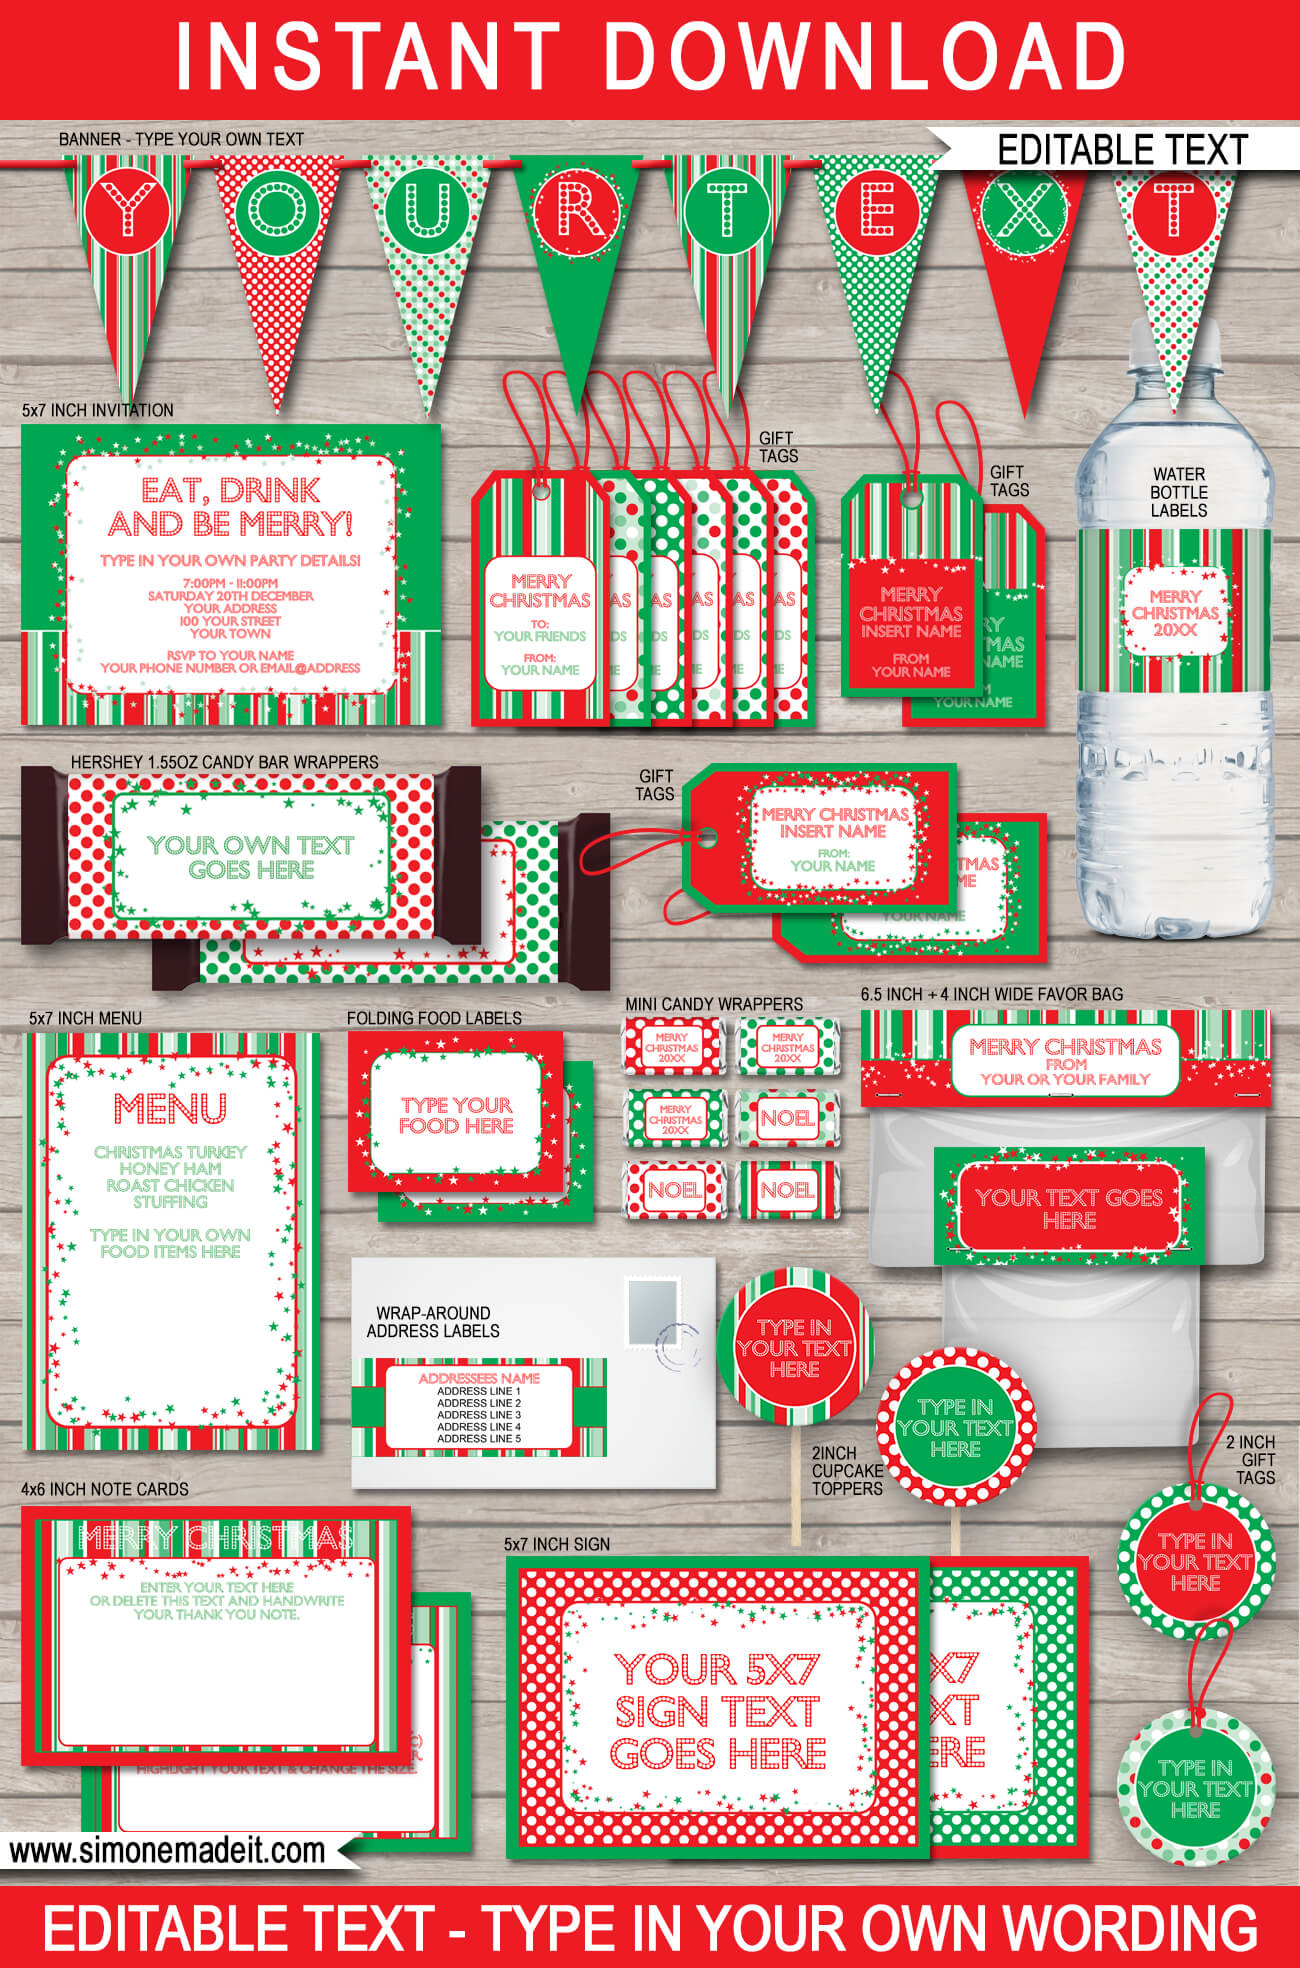 Printable Christmas Gift Tags, Invitations and Decorations | Editable Templates | instant download via simonemadeit.com